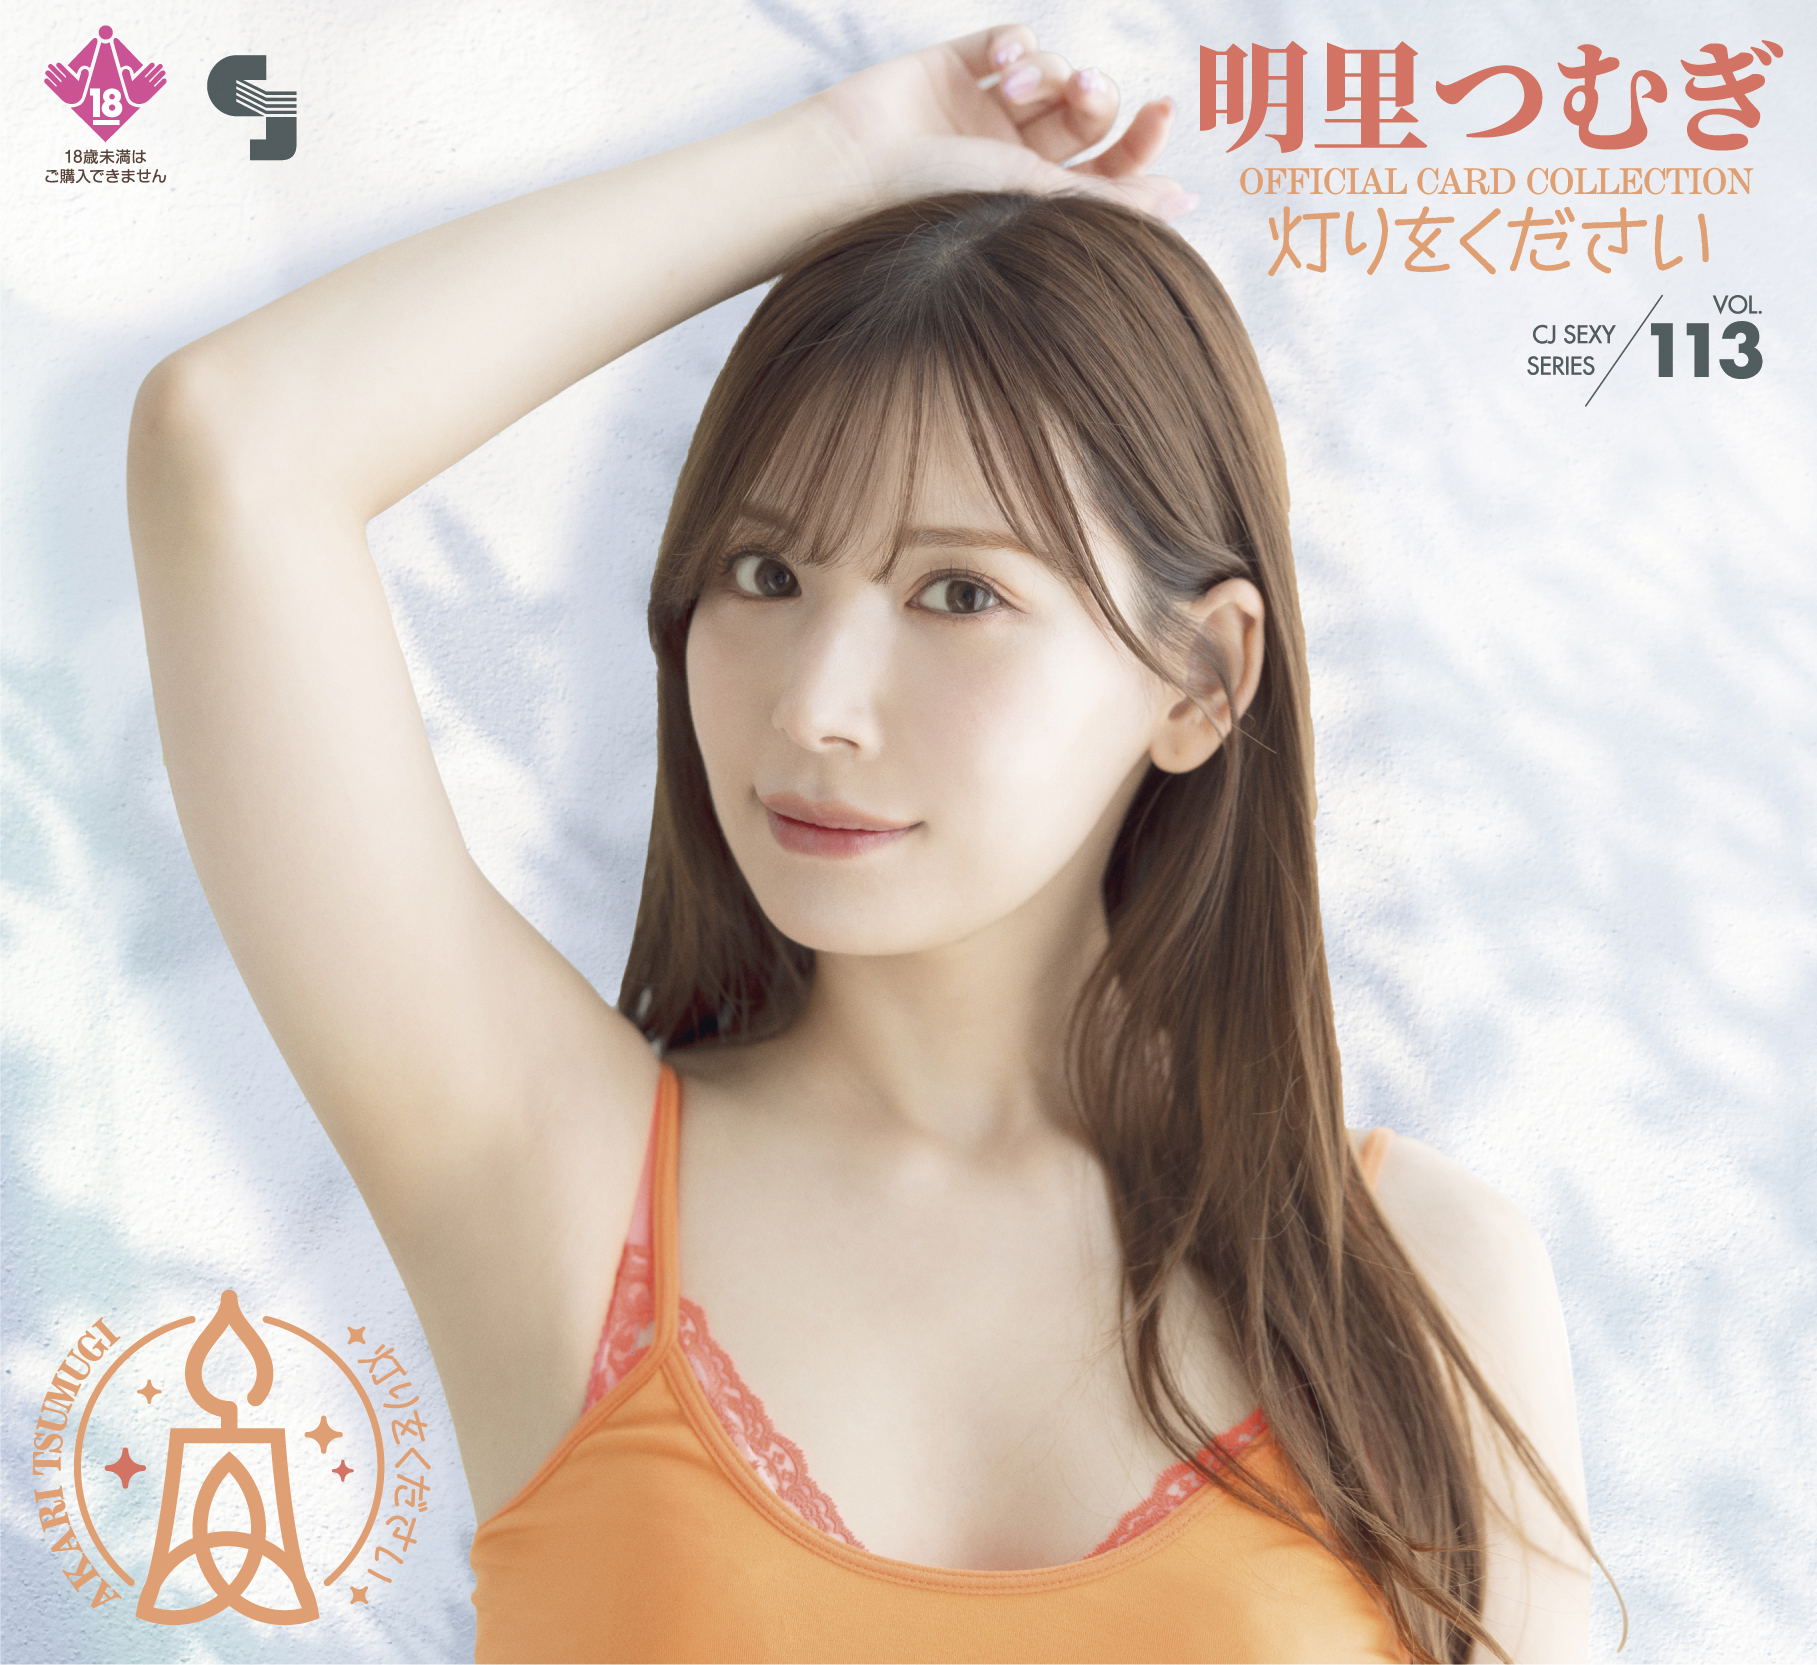 CJ Sexy Card Series Vol. 113 Tsumugi Akari Official Card Collection -Akari Wo Kudasai- (Random Single) Jyutoku